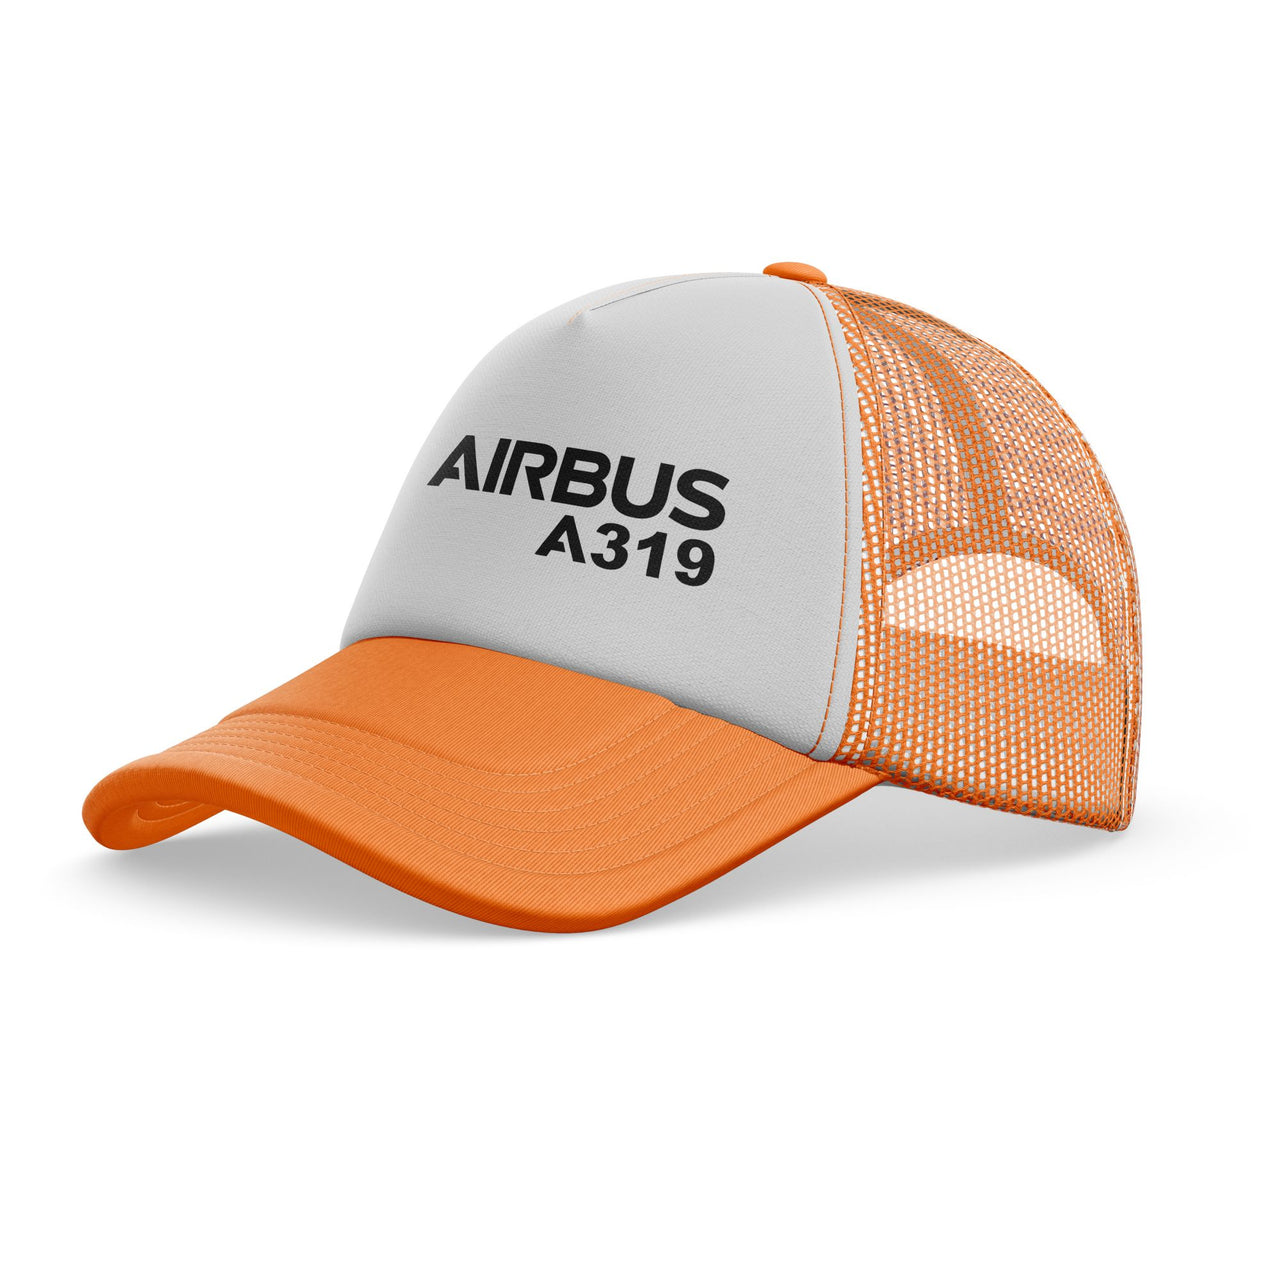 Airbus A319 & Text Designed Trucker Caps & Hats